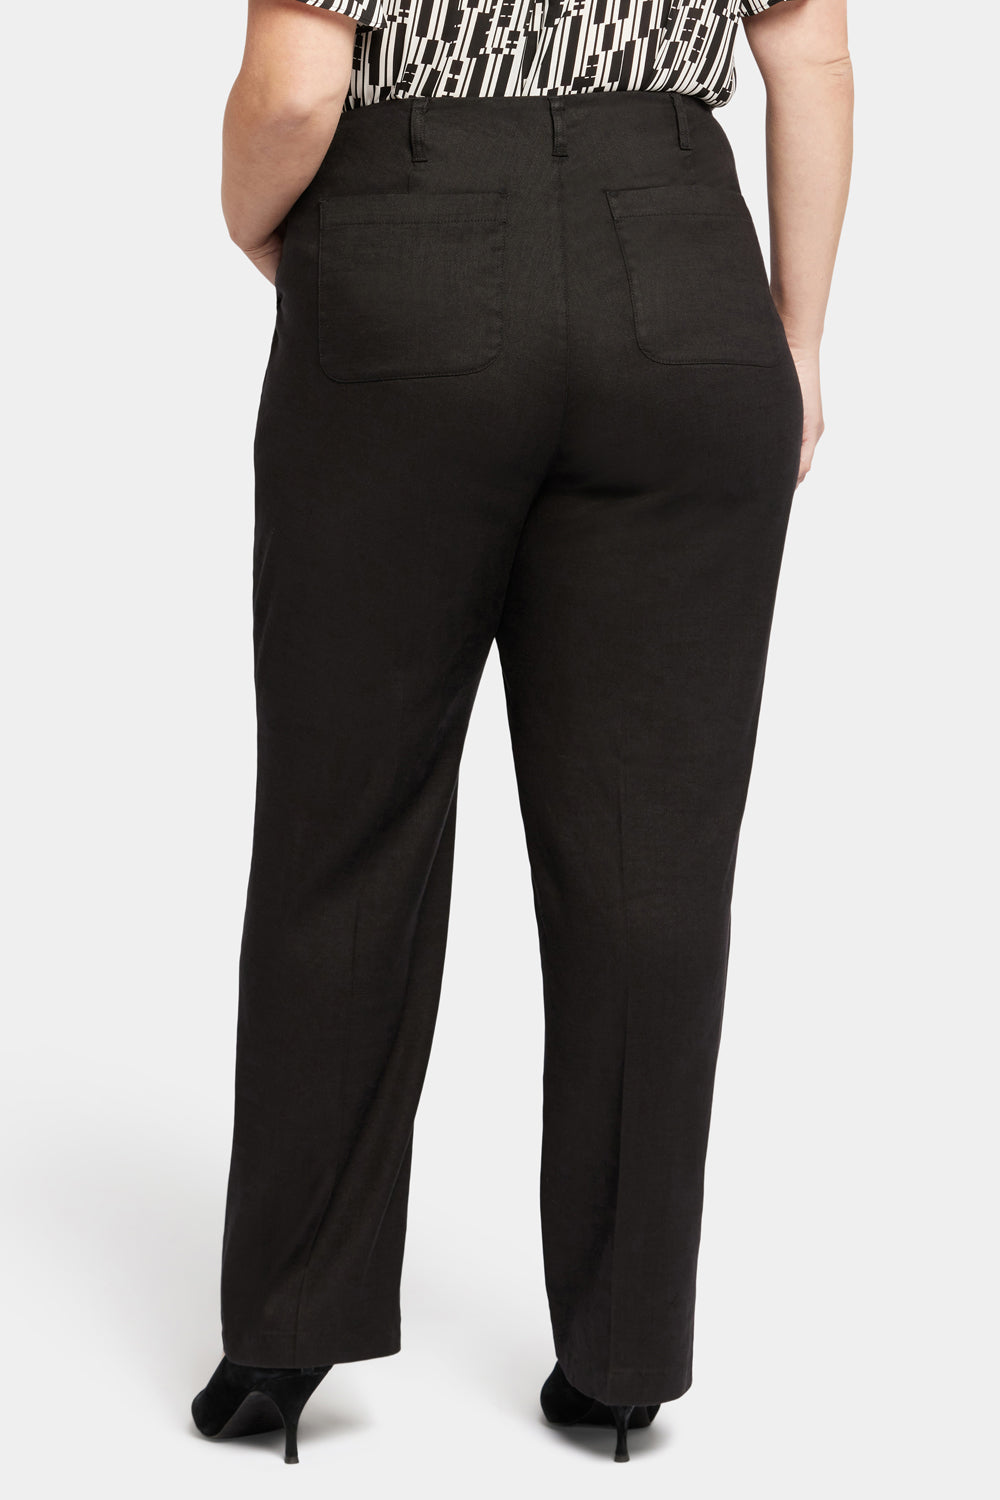 NYDJ Michelle Stretch Knit Ponte Trouser Black Women's Size 12 New - beyond  exchange